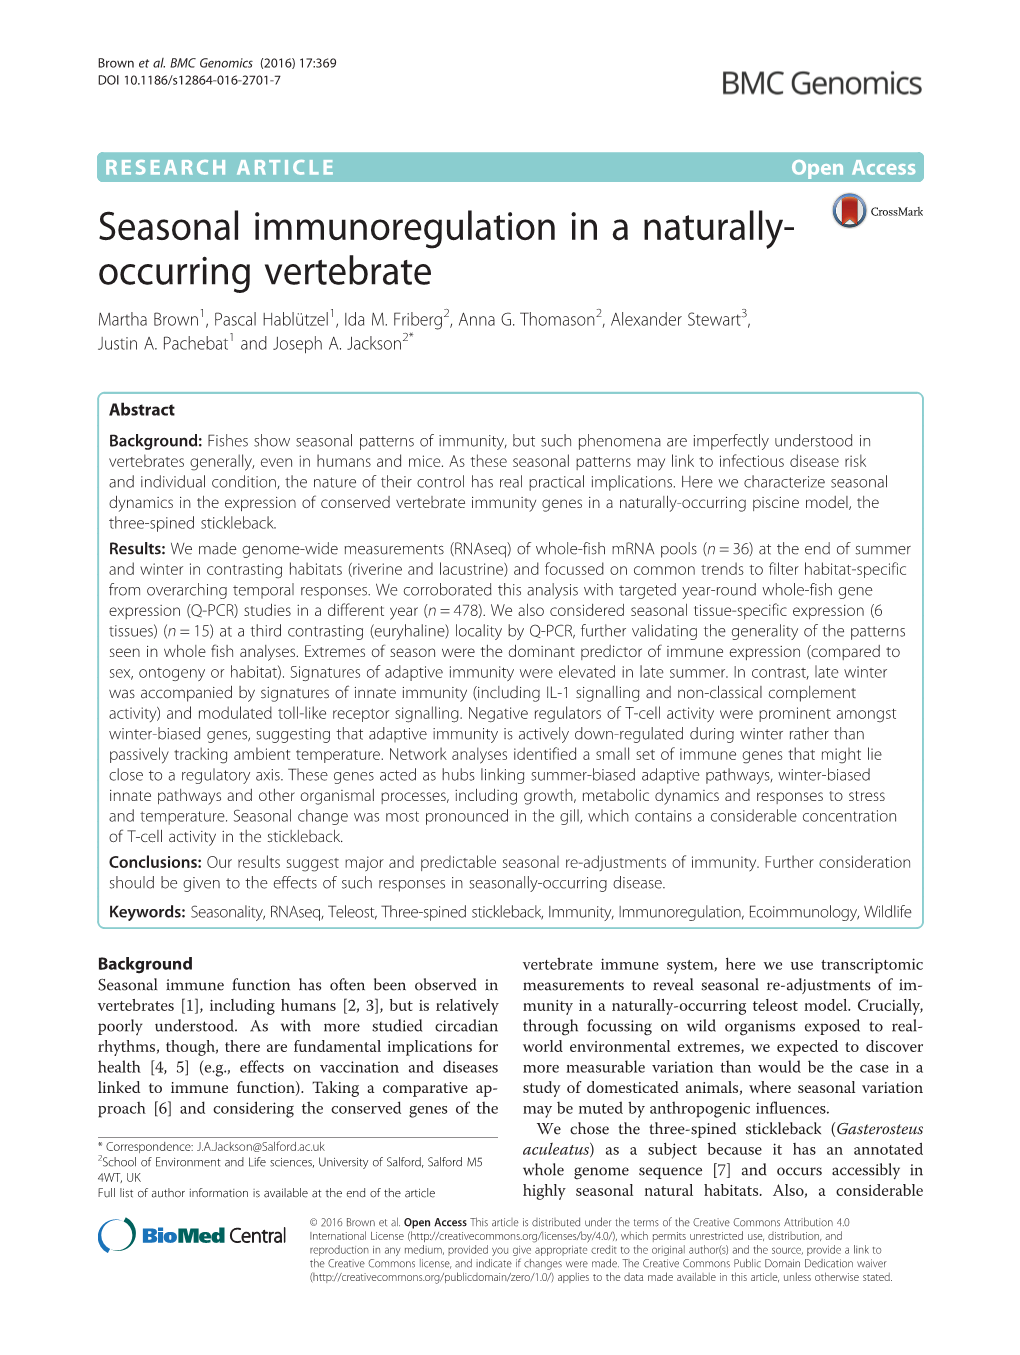 Seasonal Immunoregulation in a Naturally-Occurring Vertebrate